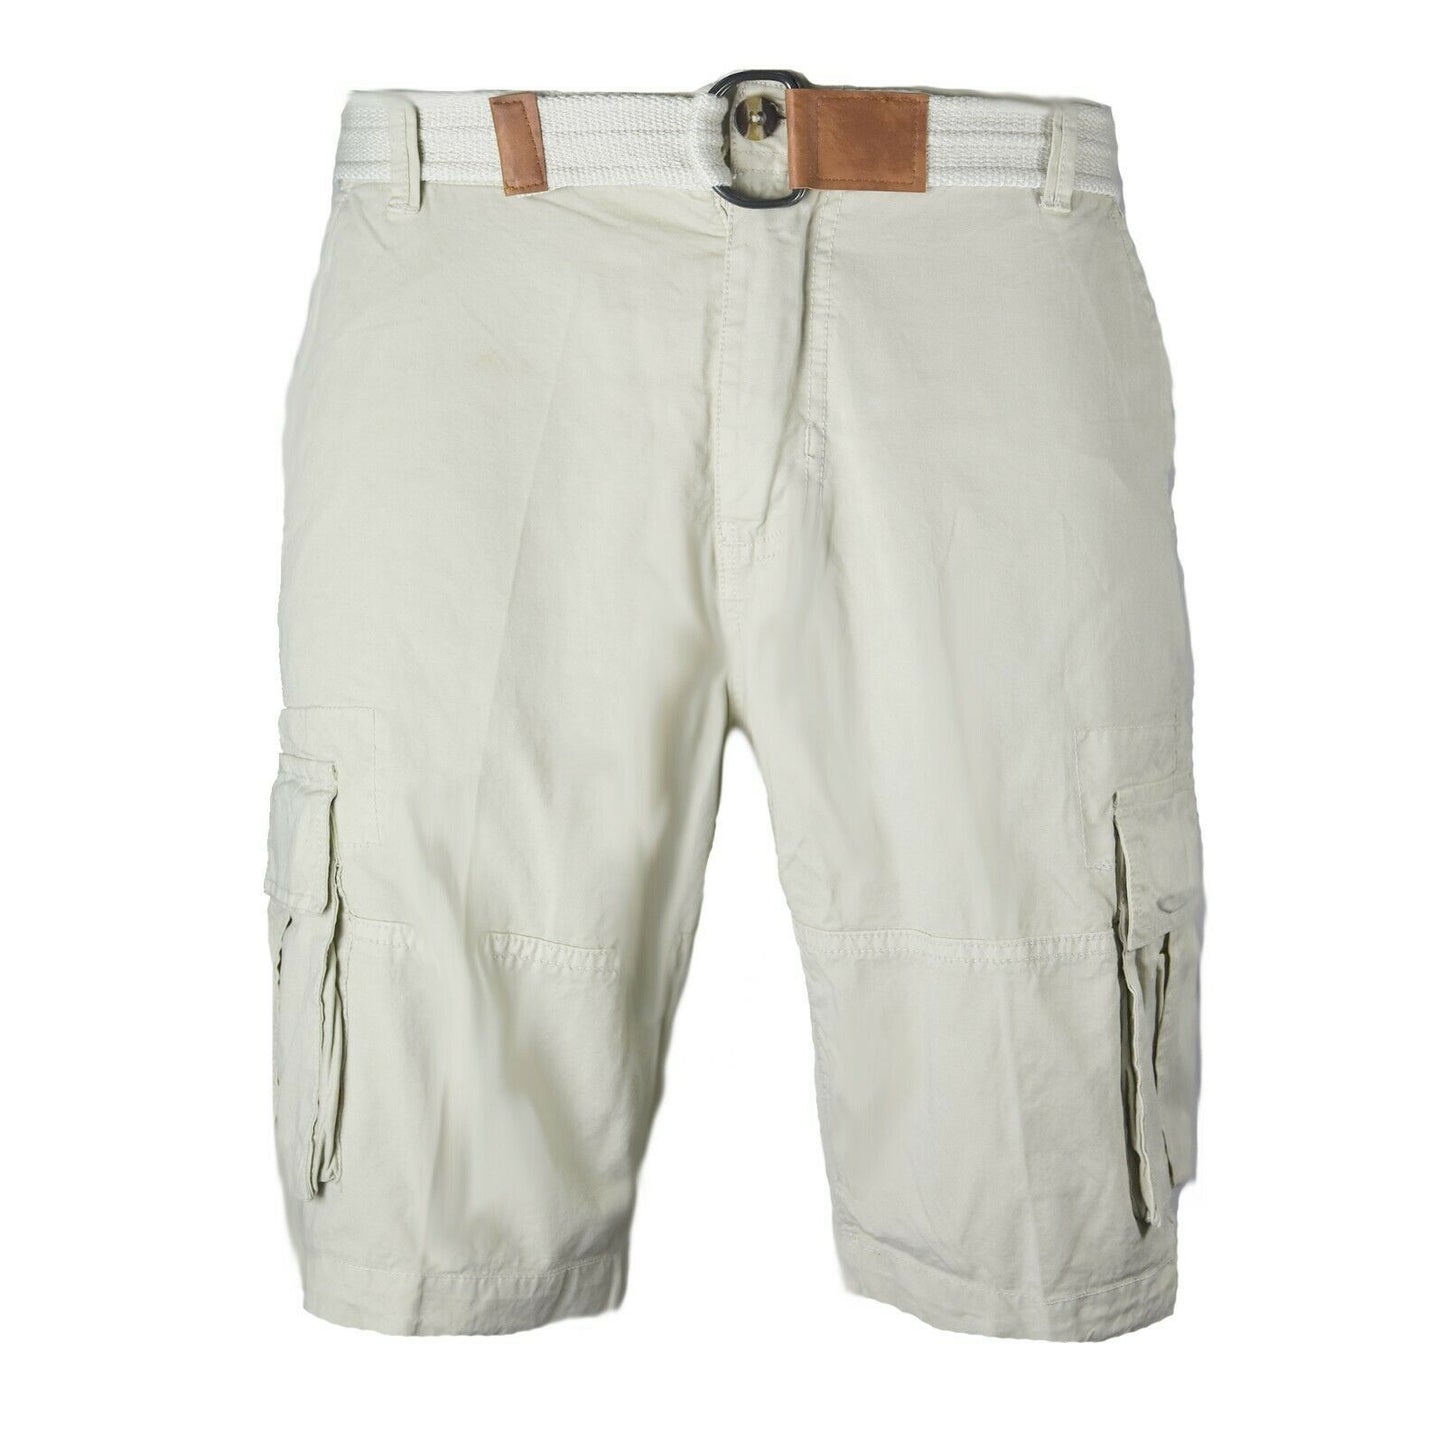 Mens Cargo Shorts Twill Cotton Knee Length Army Shorts